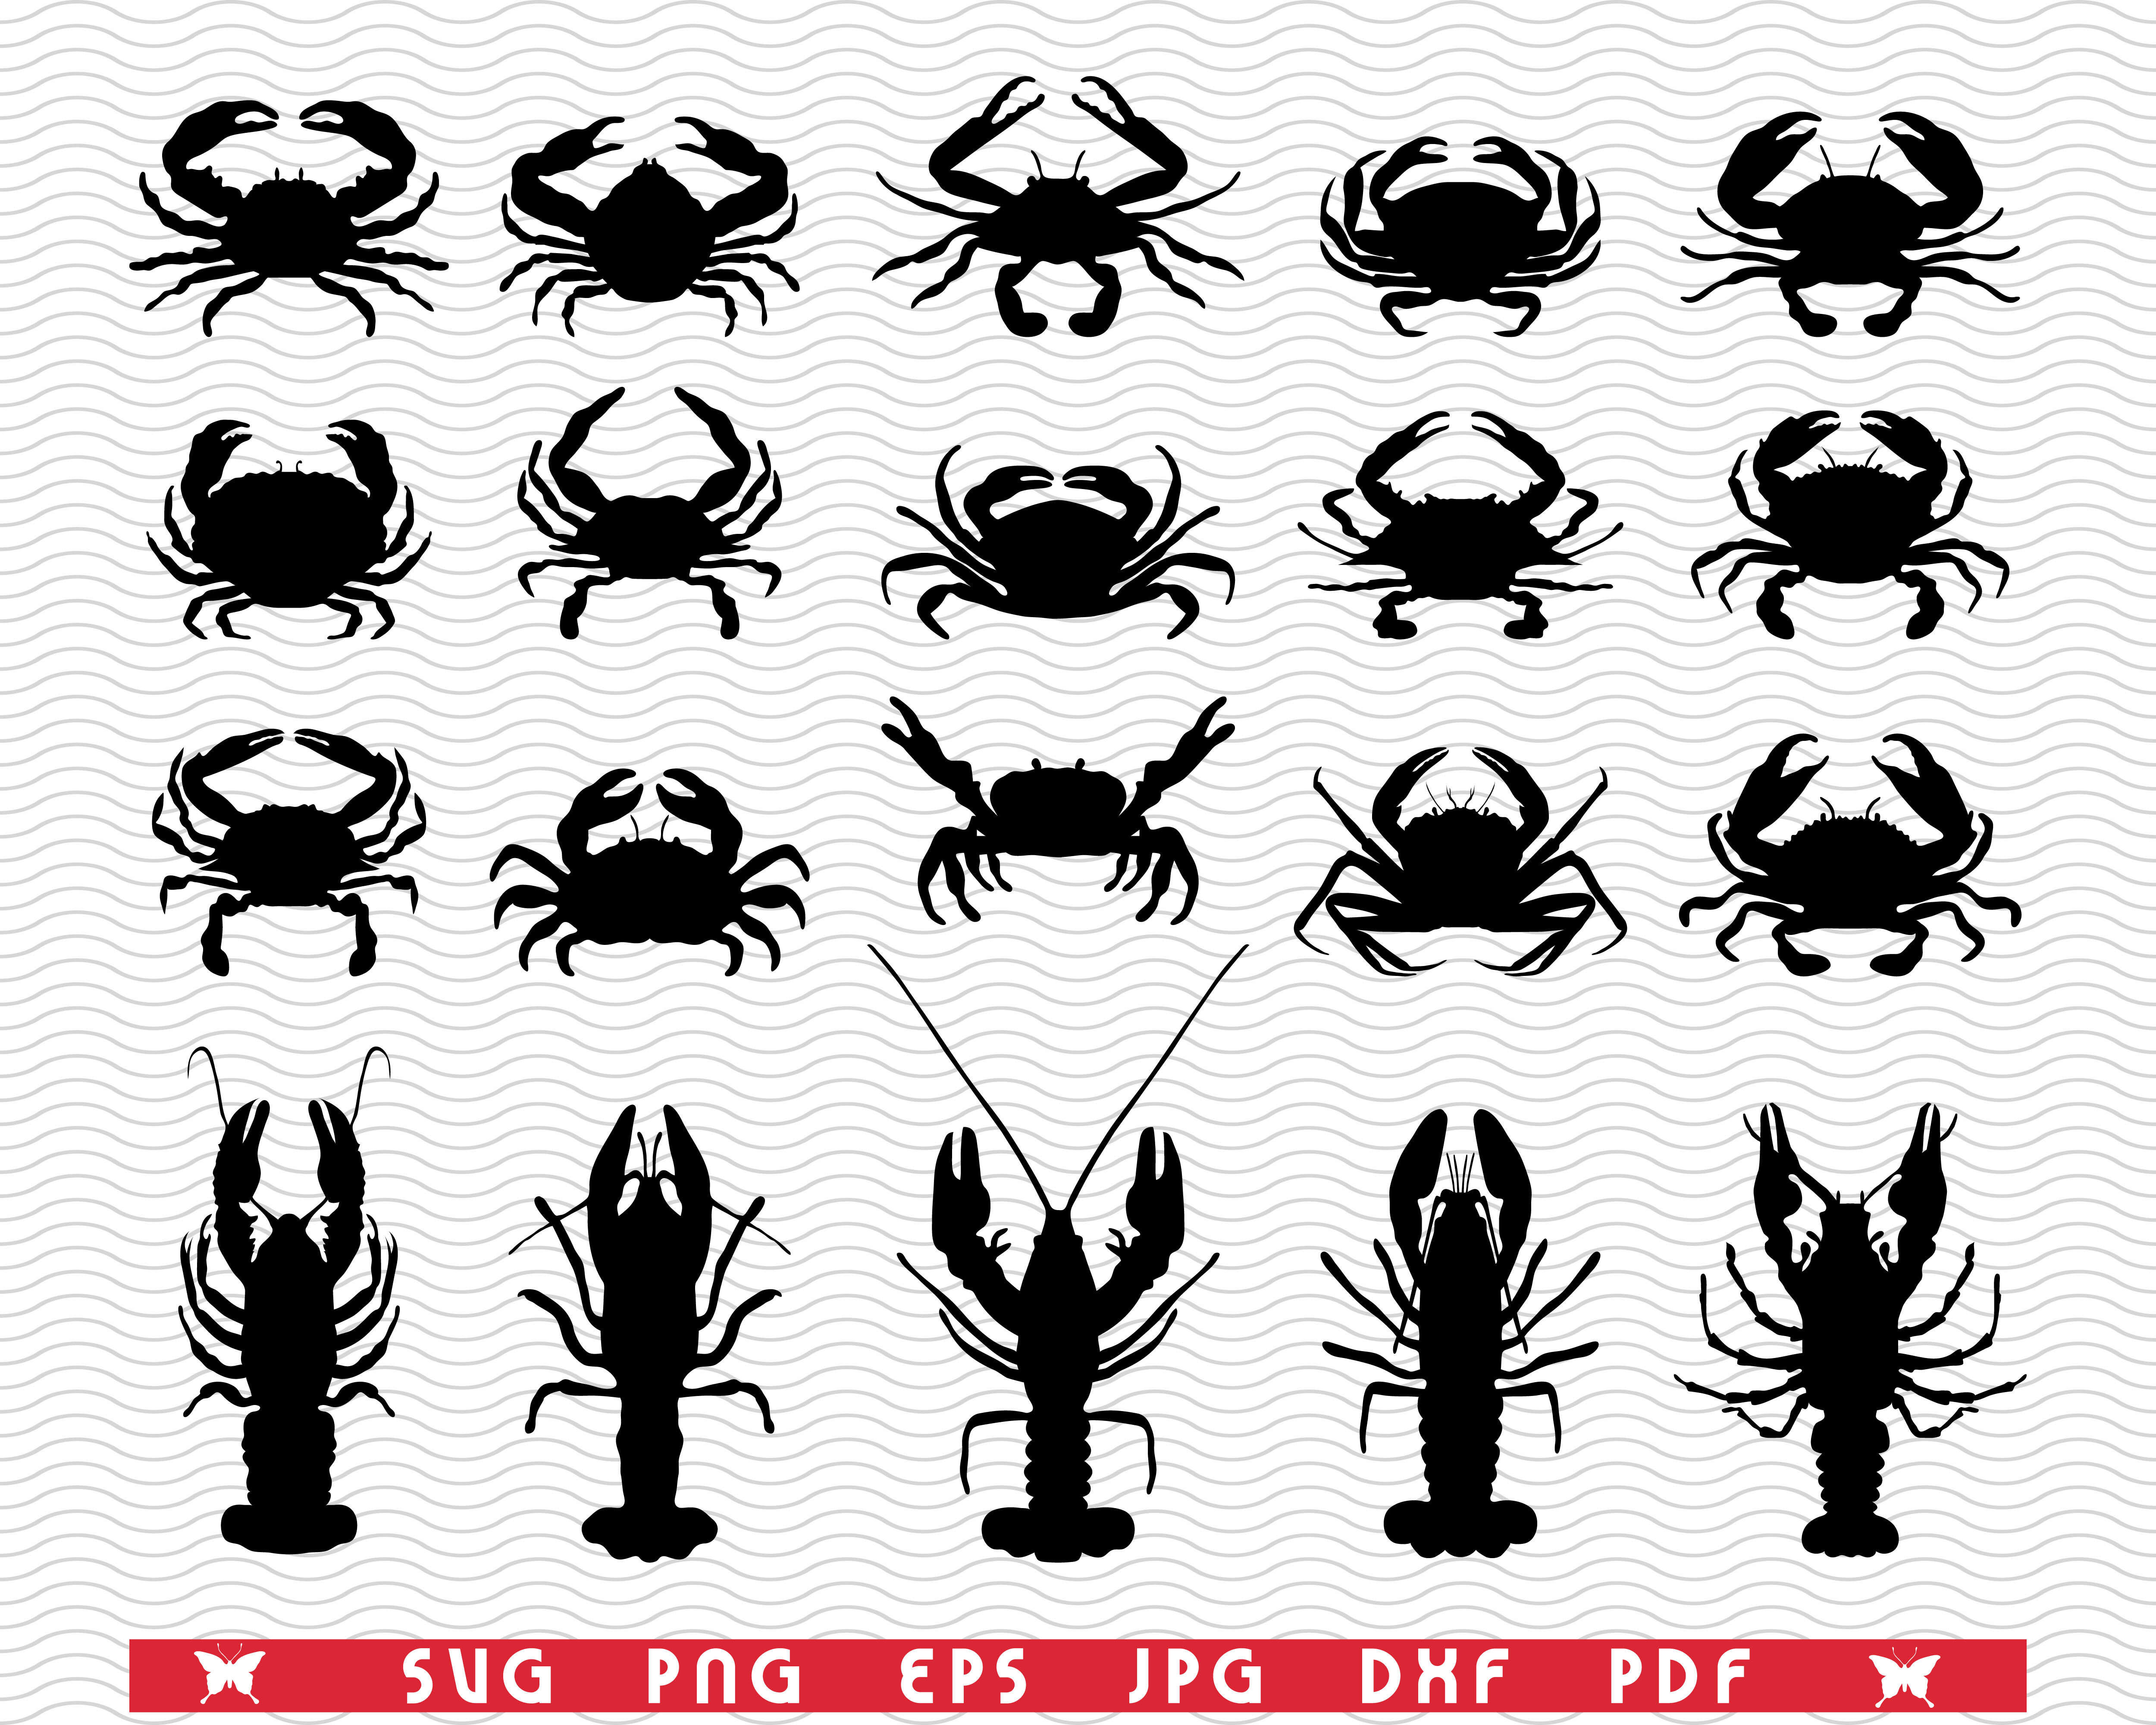 Svg Crawfish Crab Black Silhouettes Digital Clipart By Designstudiorm Thehungryjpeg Com